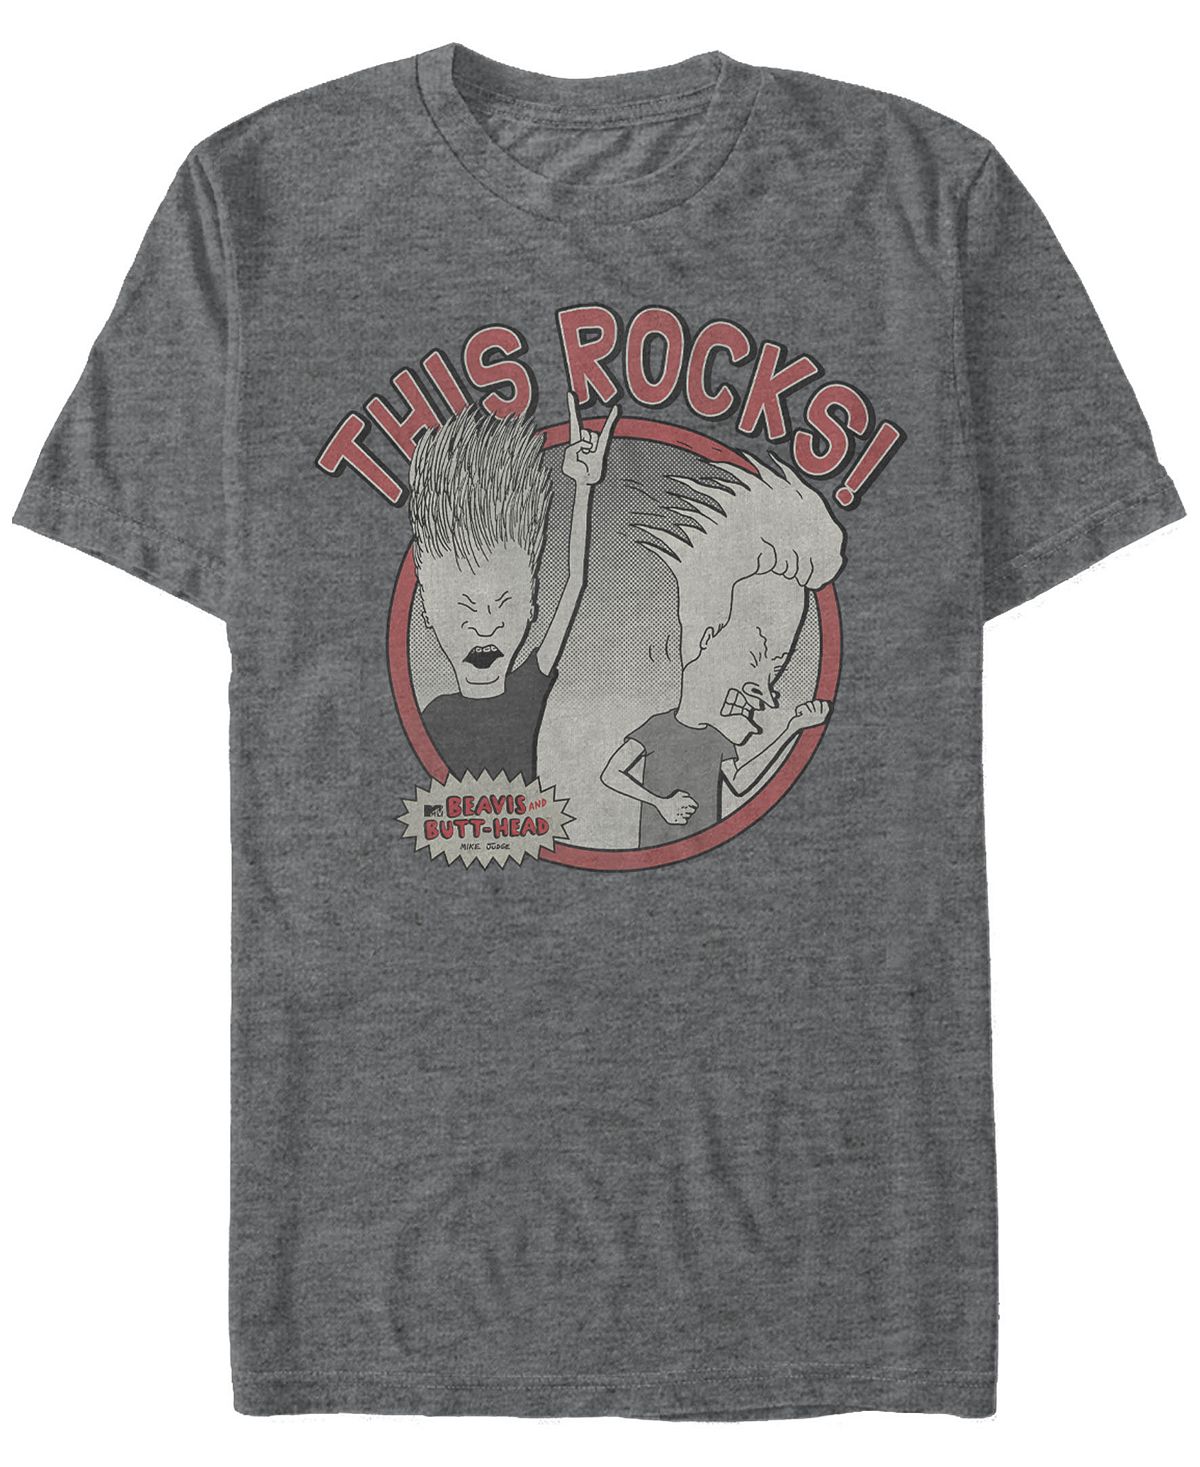 Мужская футболка с коротким рукавом с логотипом beavis and butthead mtv rock out man Fifth Sun, мульти